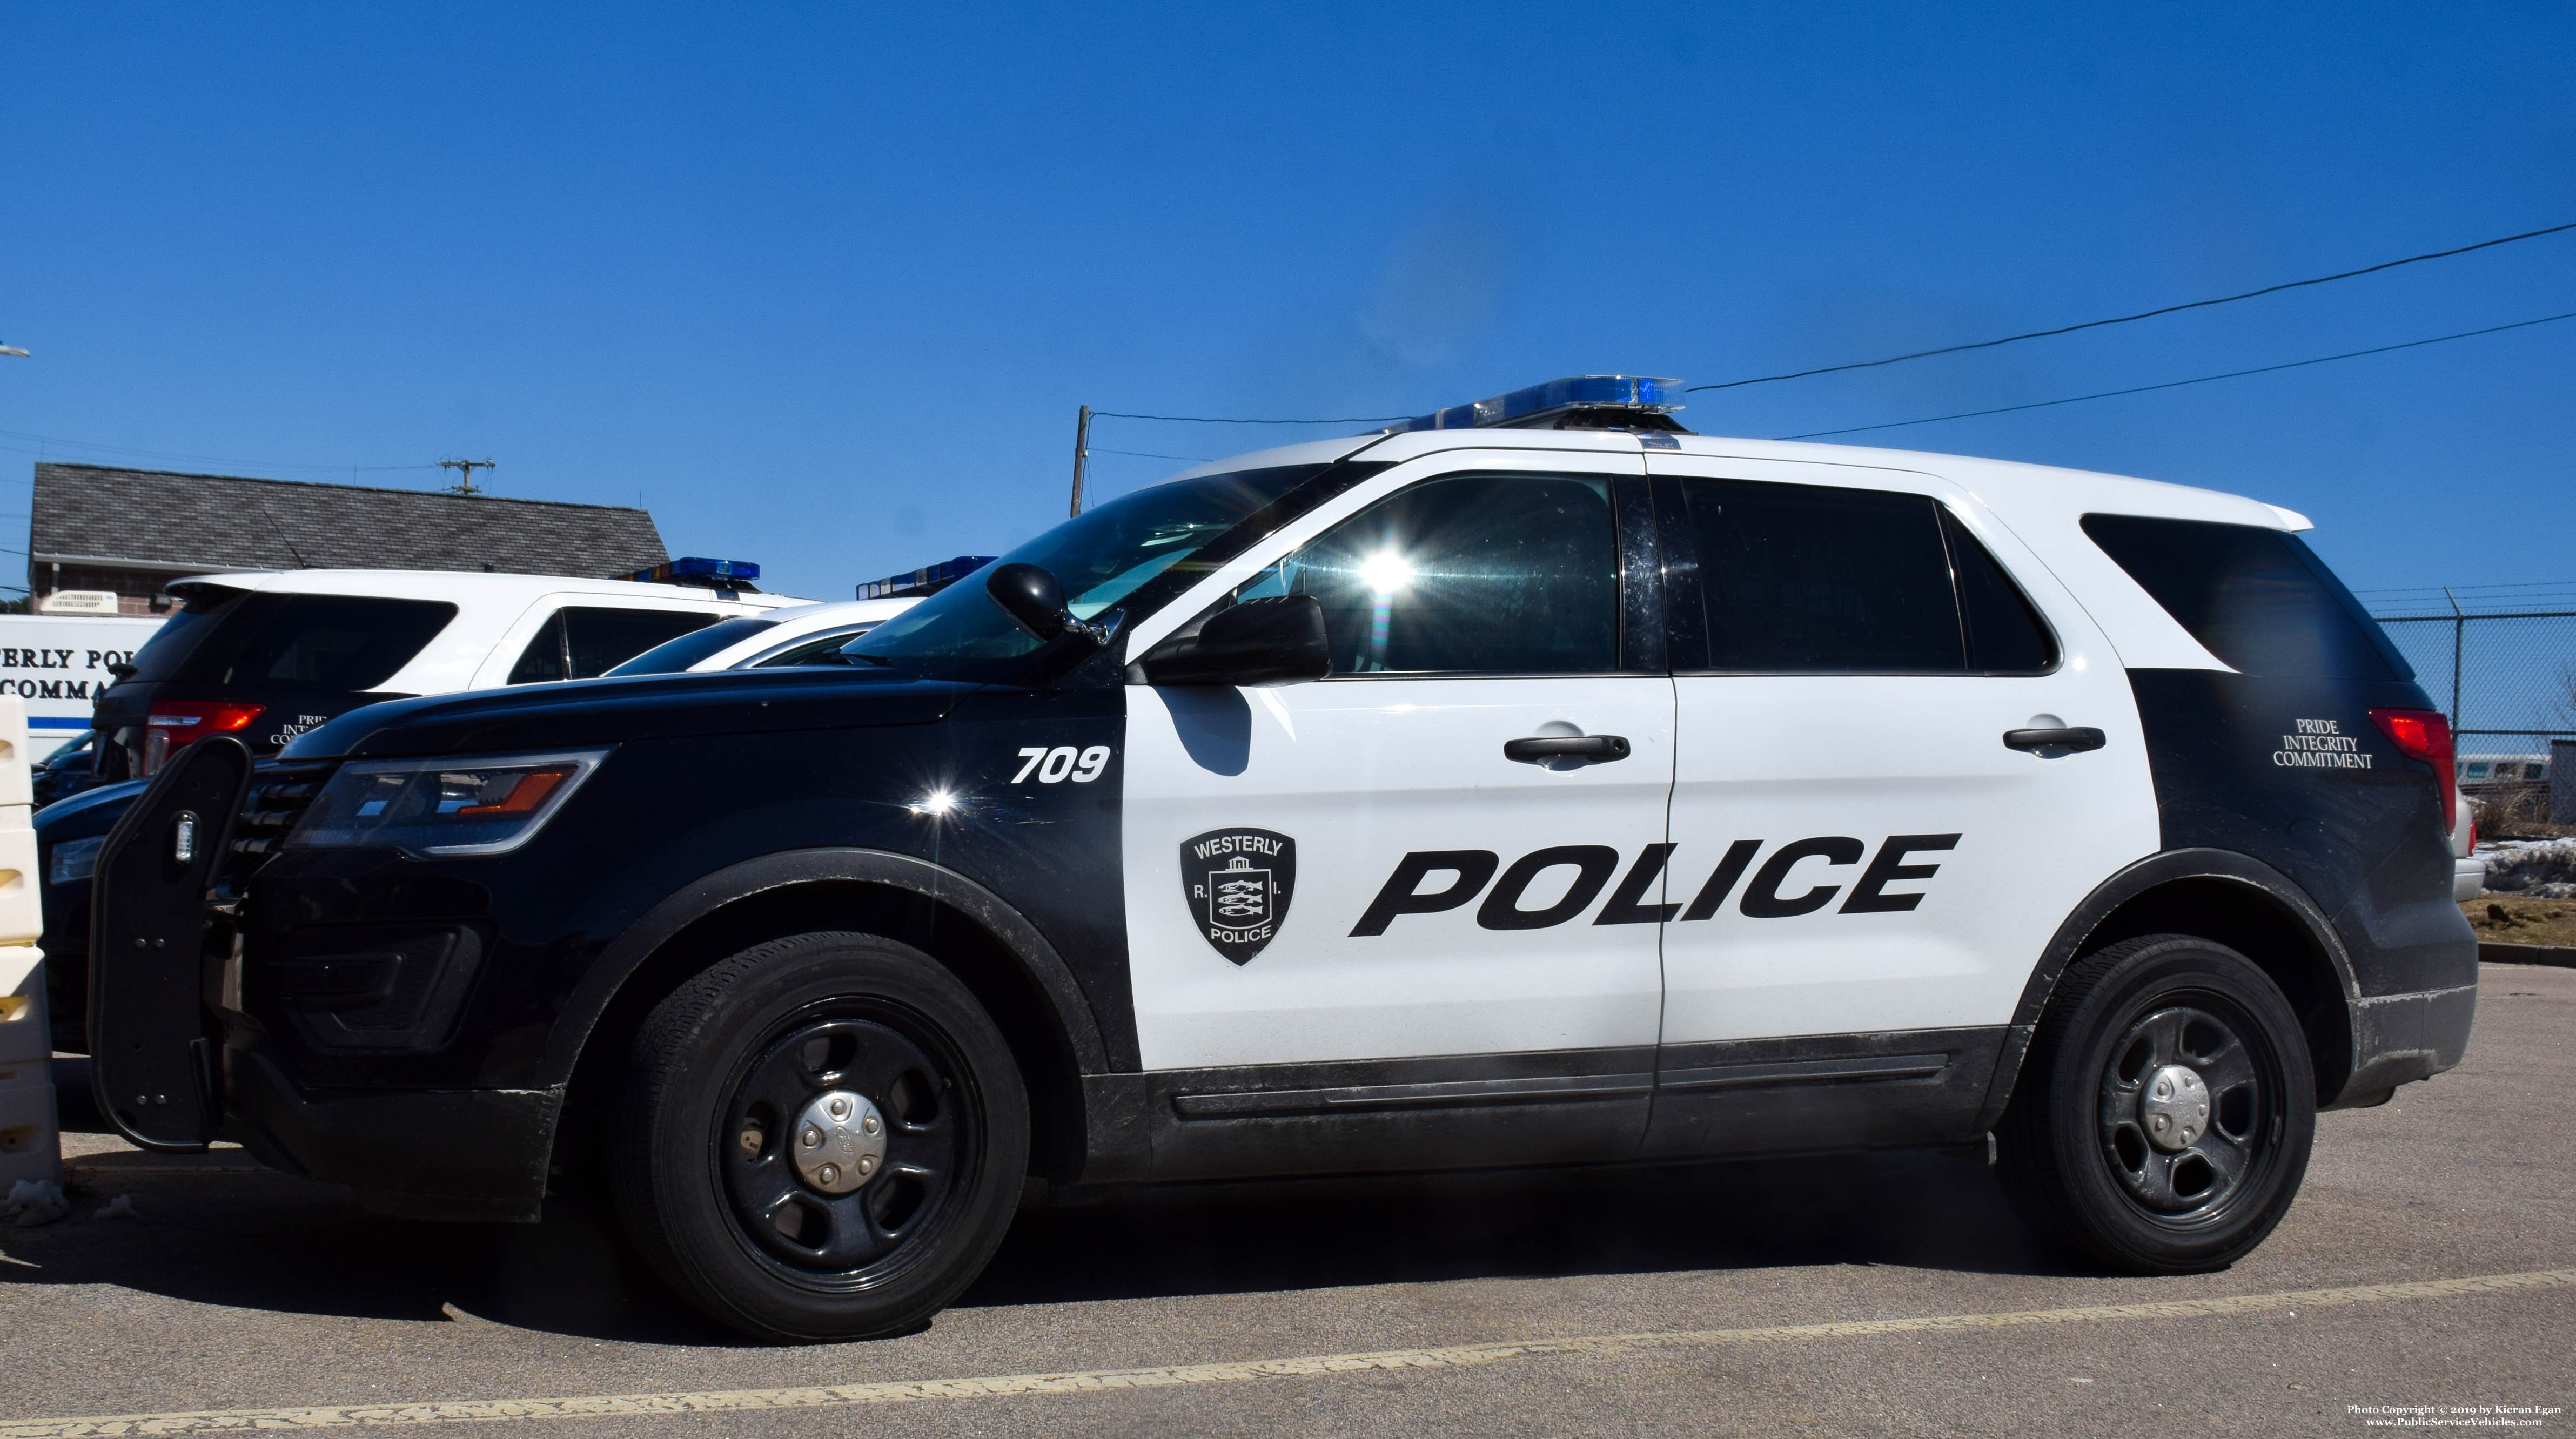 A photo  of Westerly Police
            Cruiser 709, a 2016-2019 Ford Police Interceptor Utility             taken by Kieran Egan